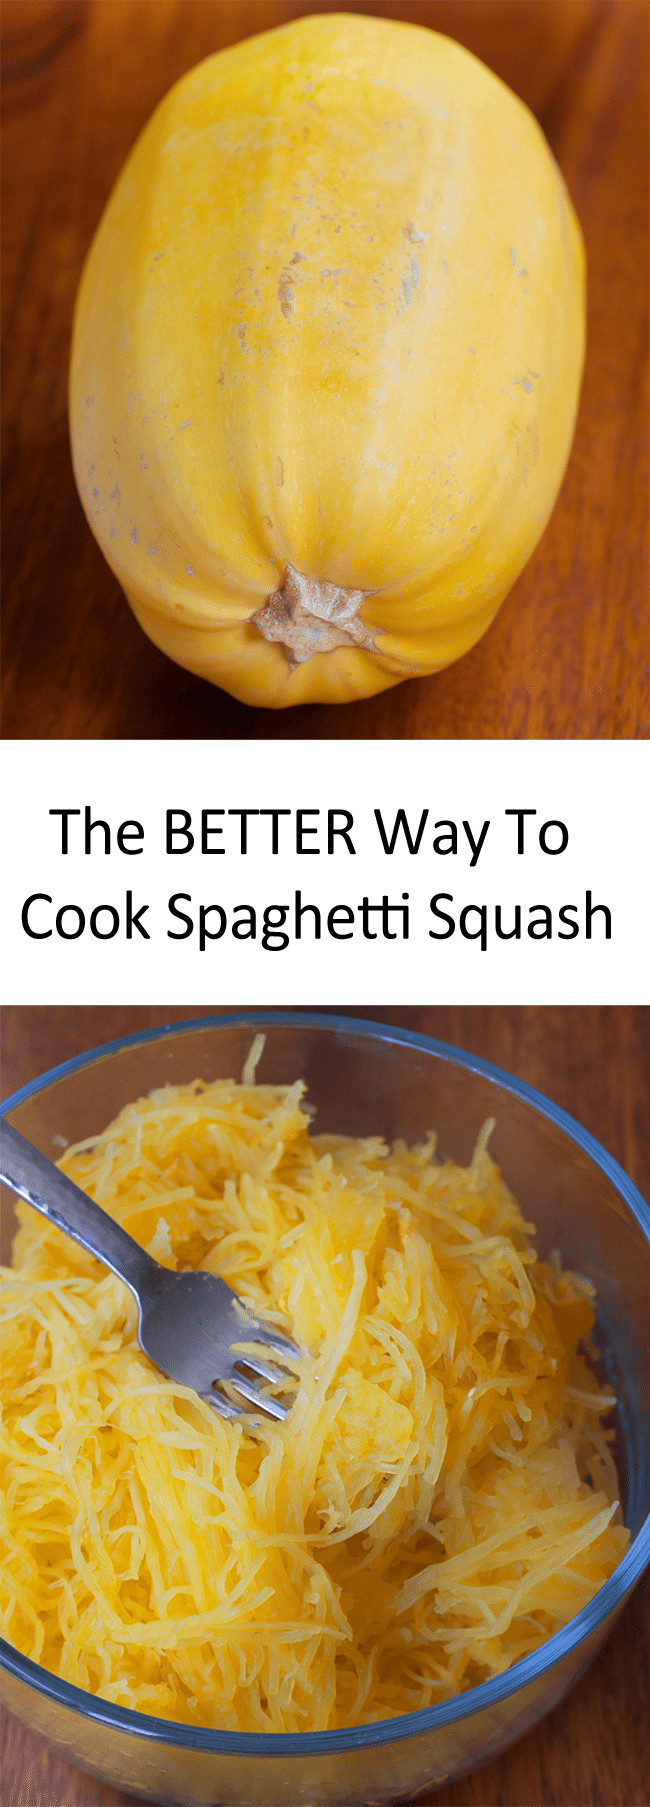 Microwave Spaghetti Squash
 How To Cook Spaghetti Squash